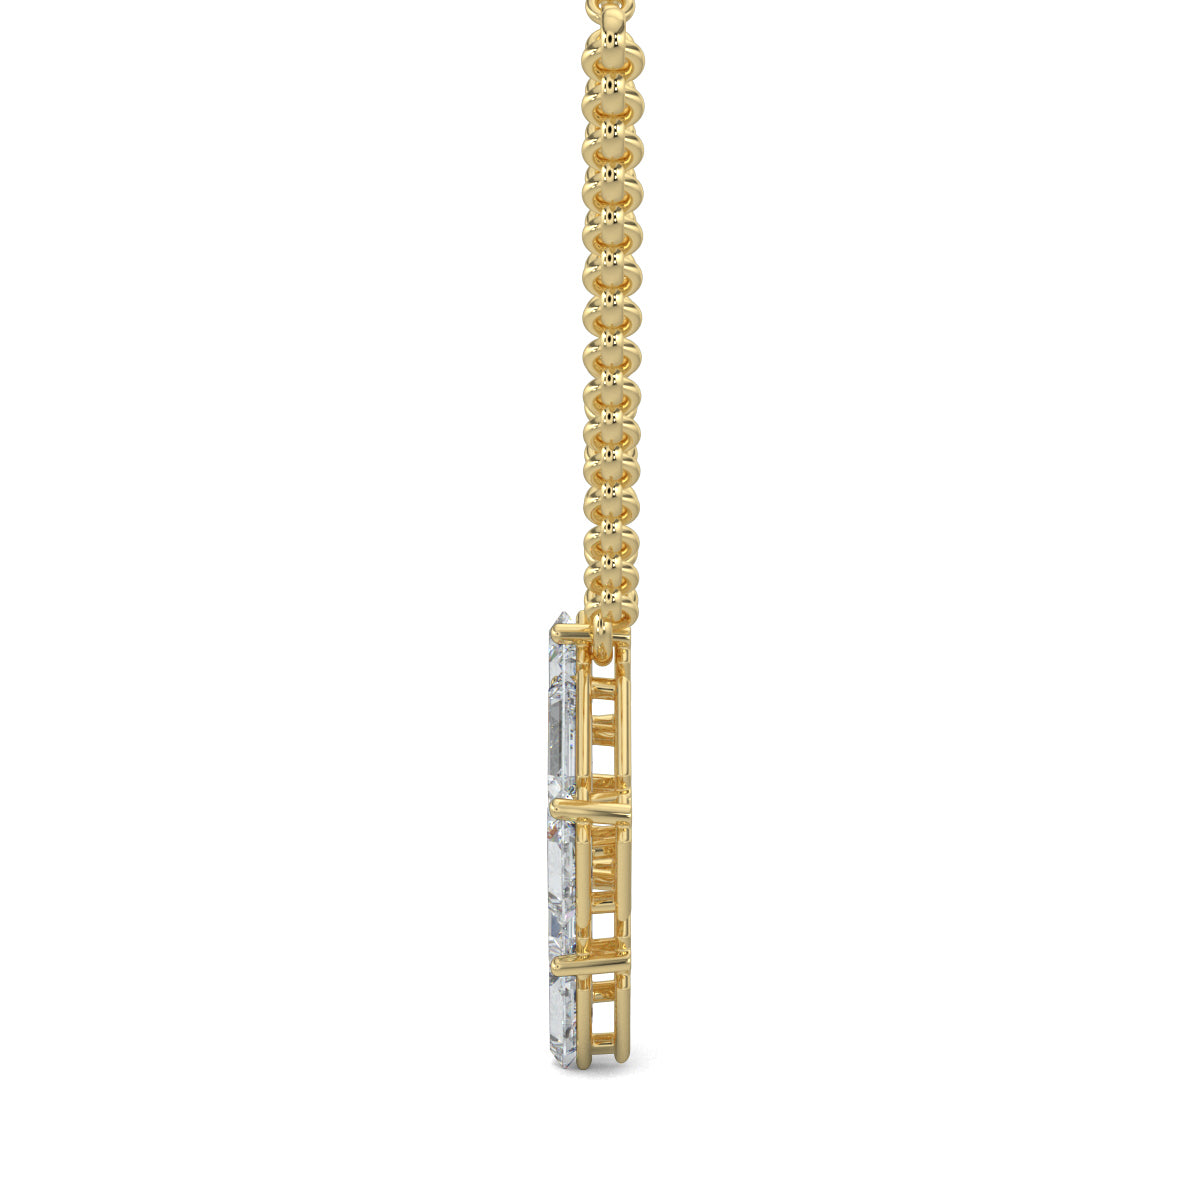 Yellow Gold, Diamond pendants, Astral Luxe Pendant, natural diamonds, lab-grown diamonds, rectangle pendant, casual jewelry, elegant pendant, diamond jewelry.